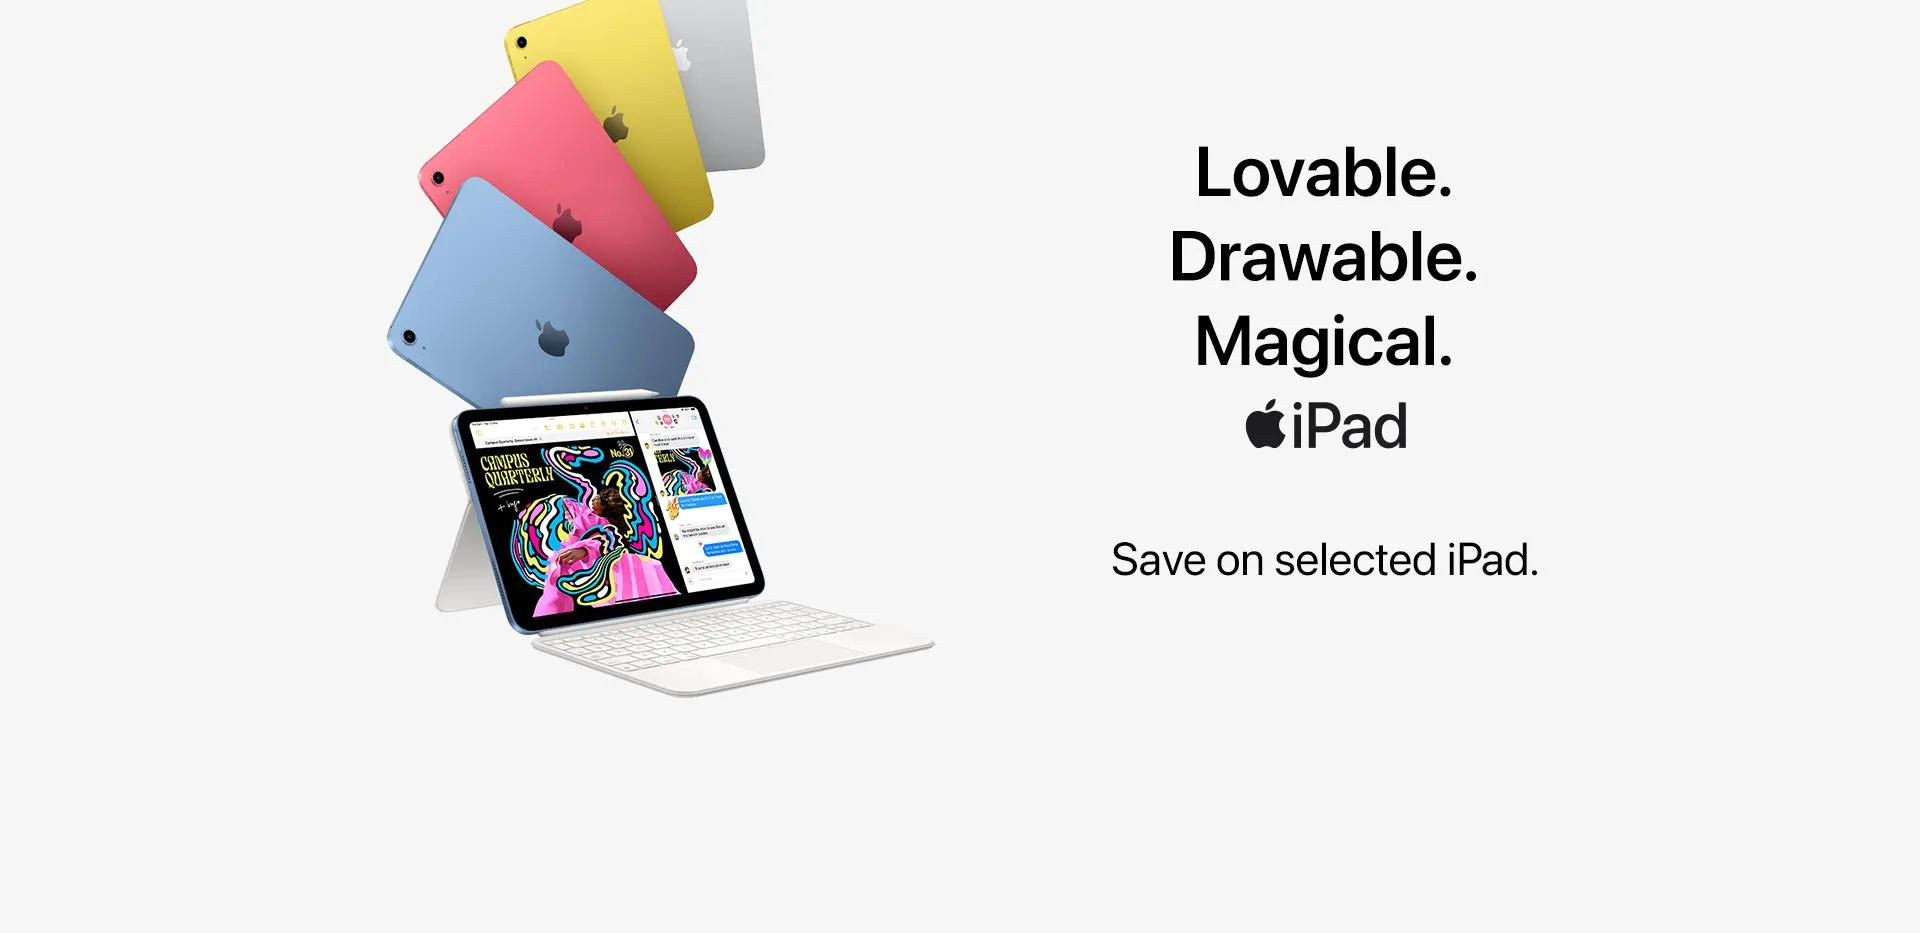 Save on selected iPad